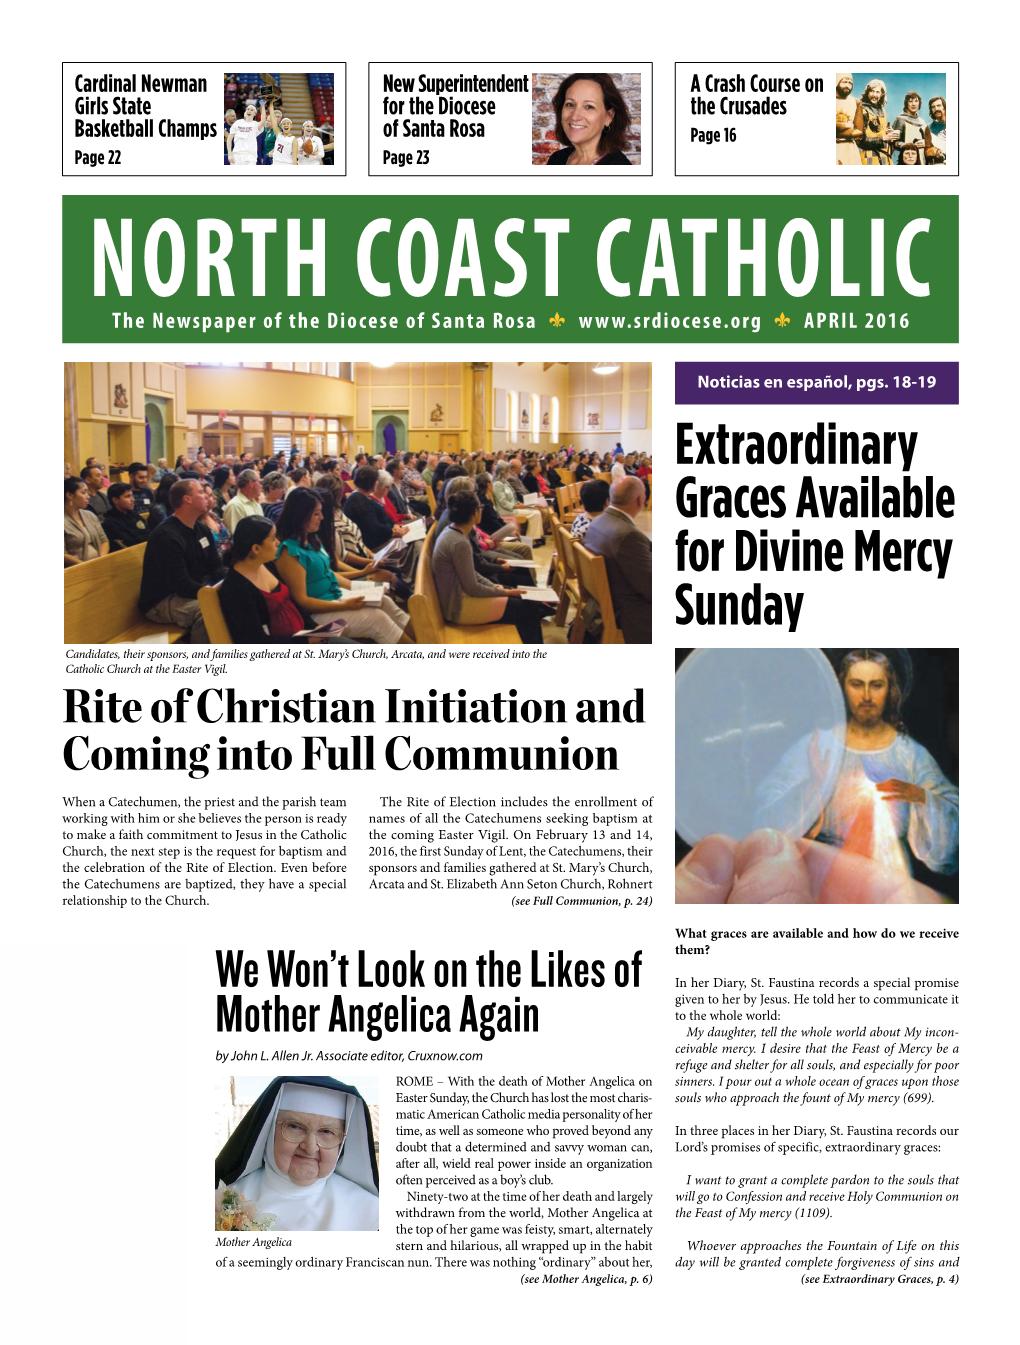 North Coast Catholic Newspaper • April 2016